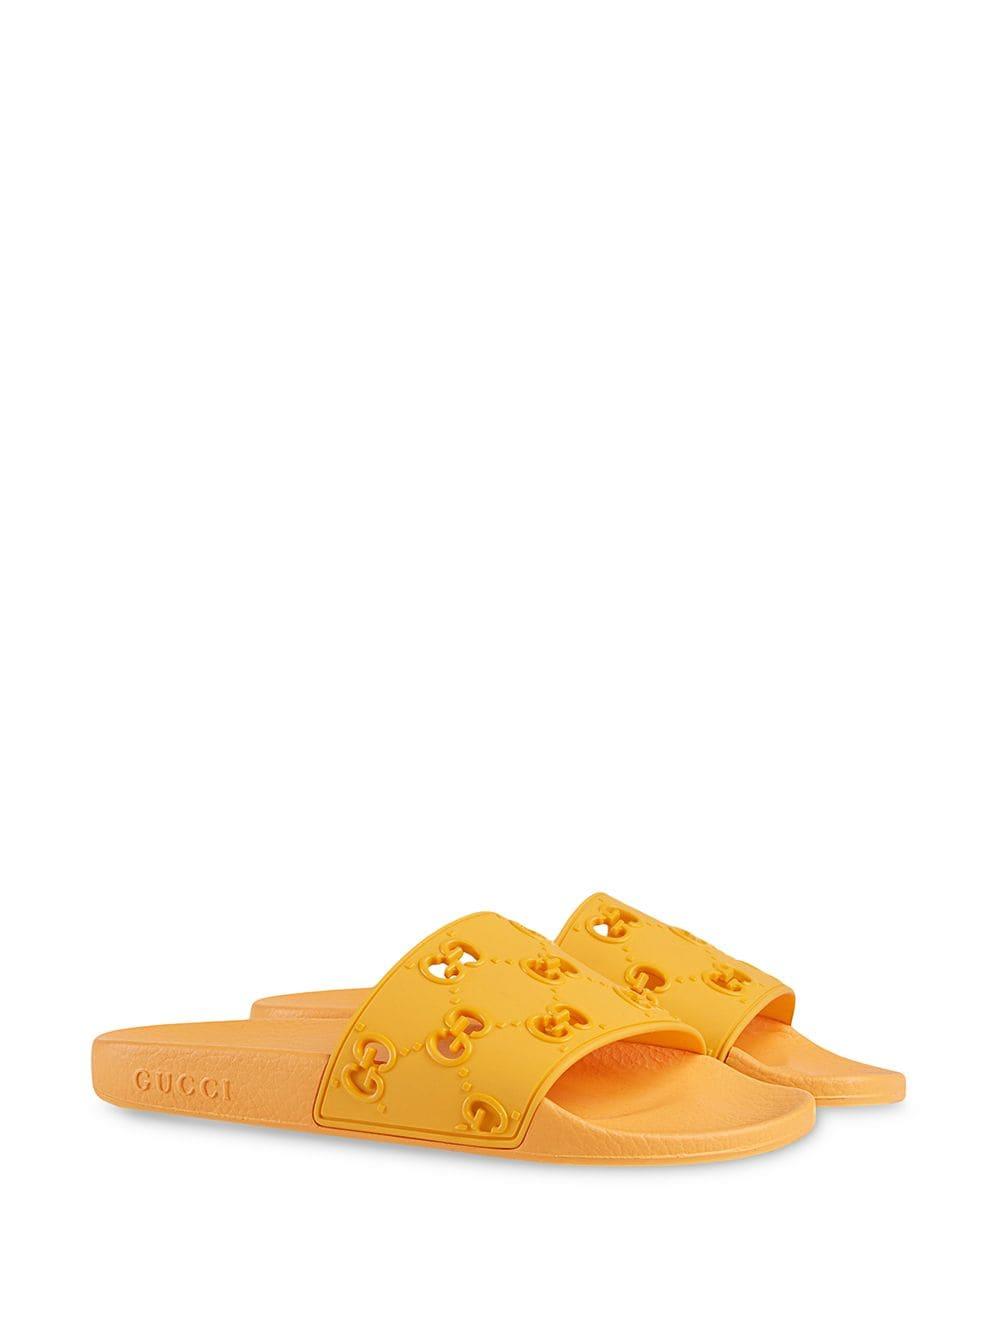 Gucci Pursuit Rubber Slide Sandals in Orange | Lyst